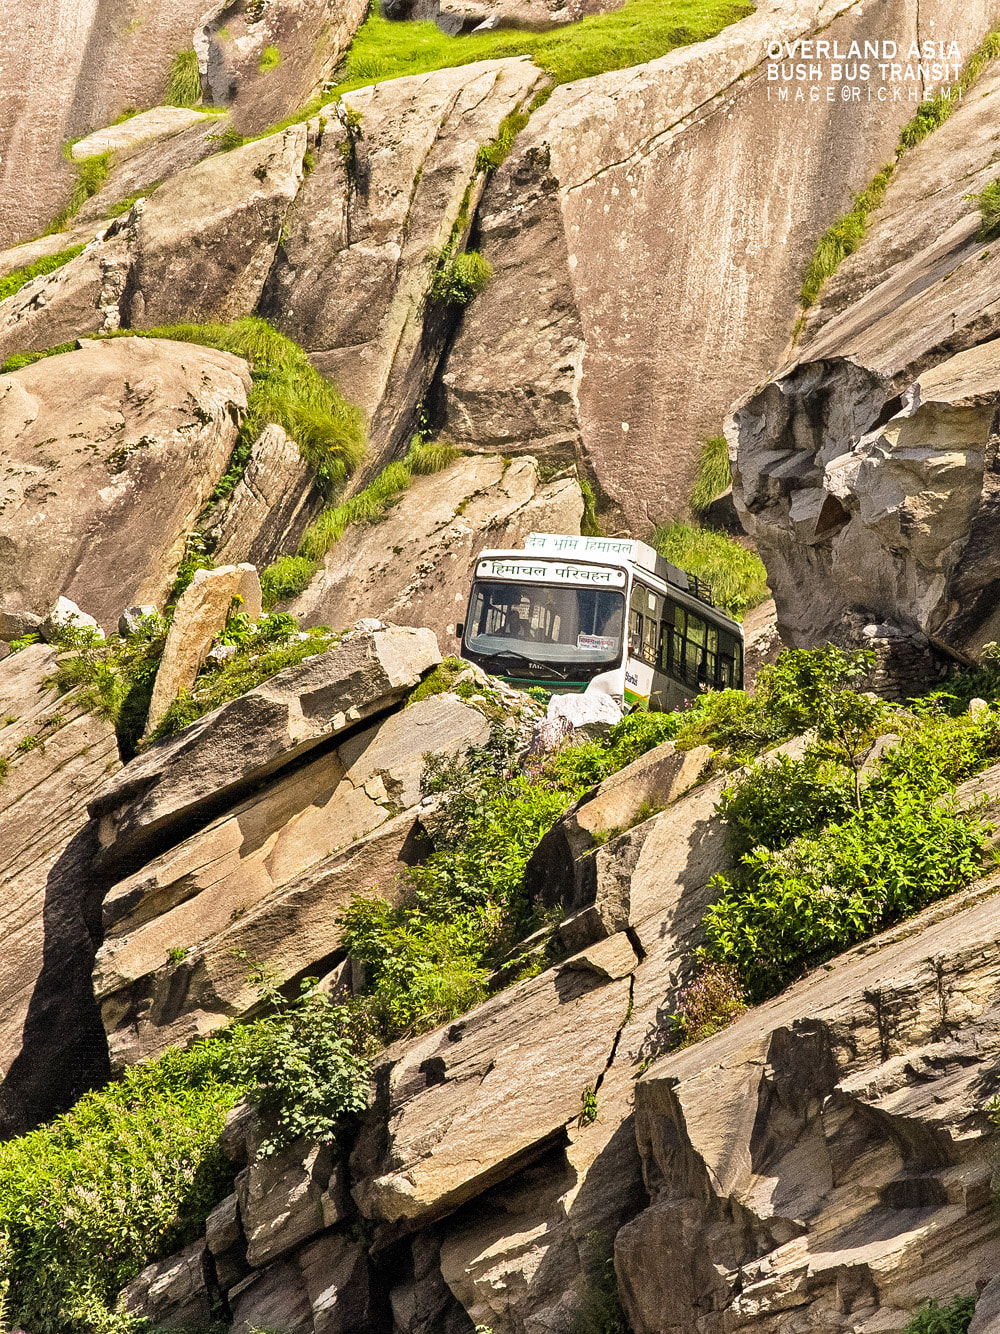 solo overland travel bush bus transit Himalaya, image by Rick Hemi